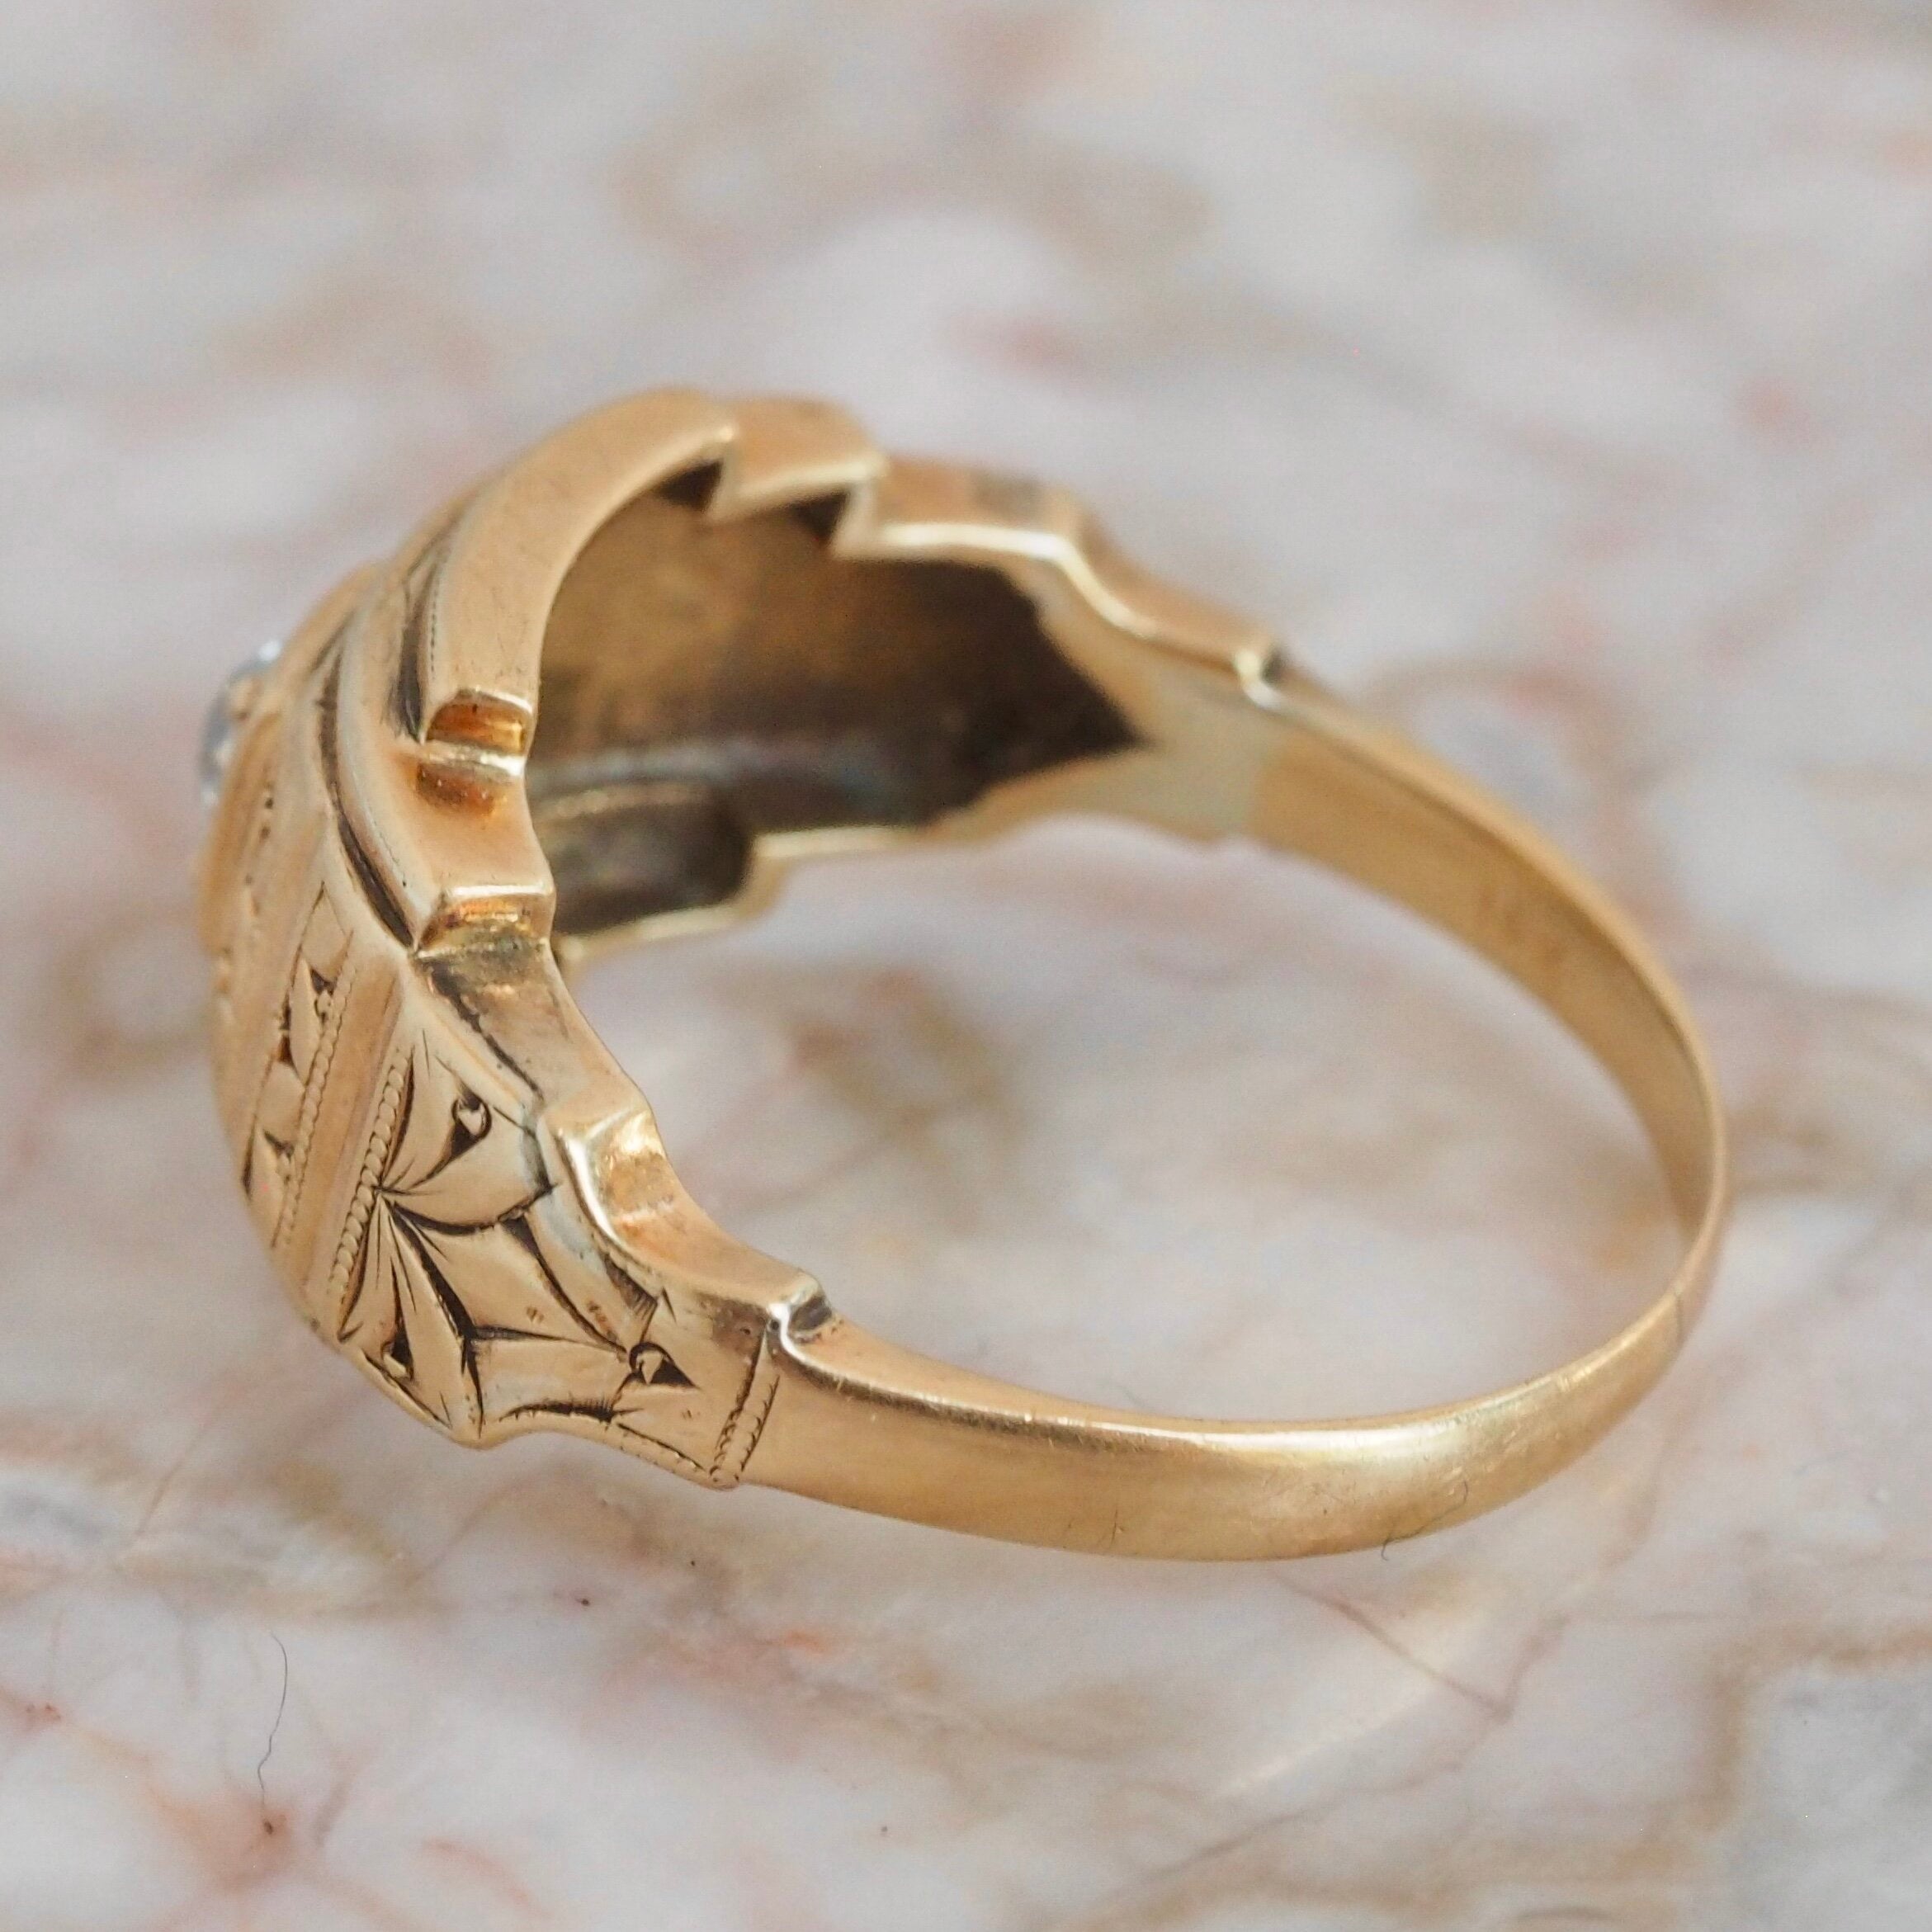 Antique Art Deco 18k Gold Engraved Dome Diamond Ring